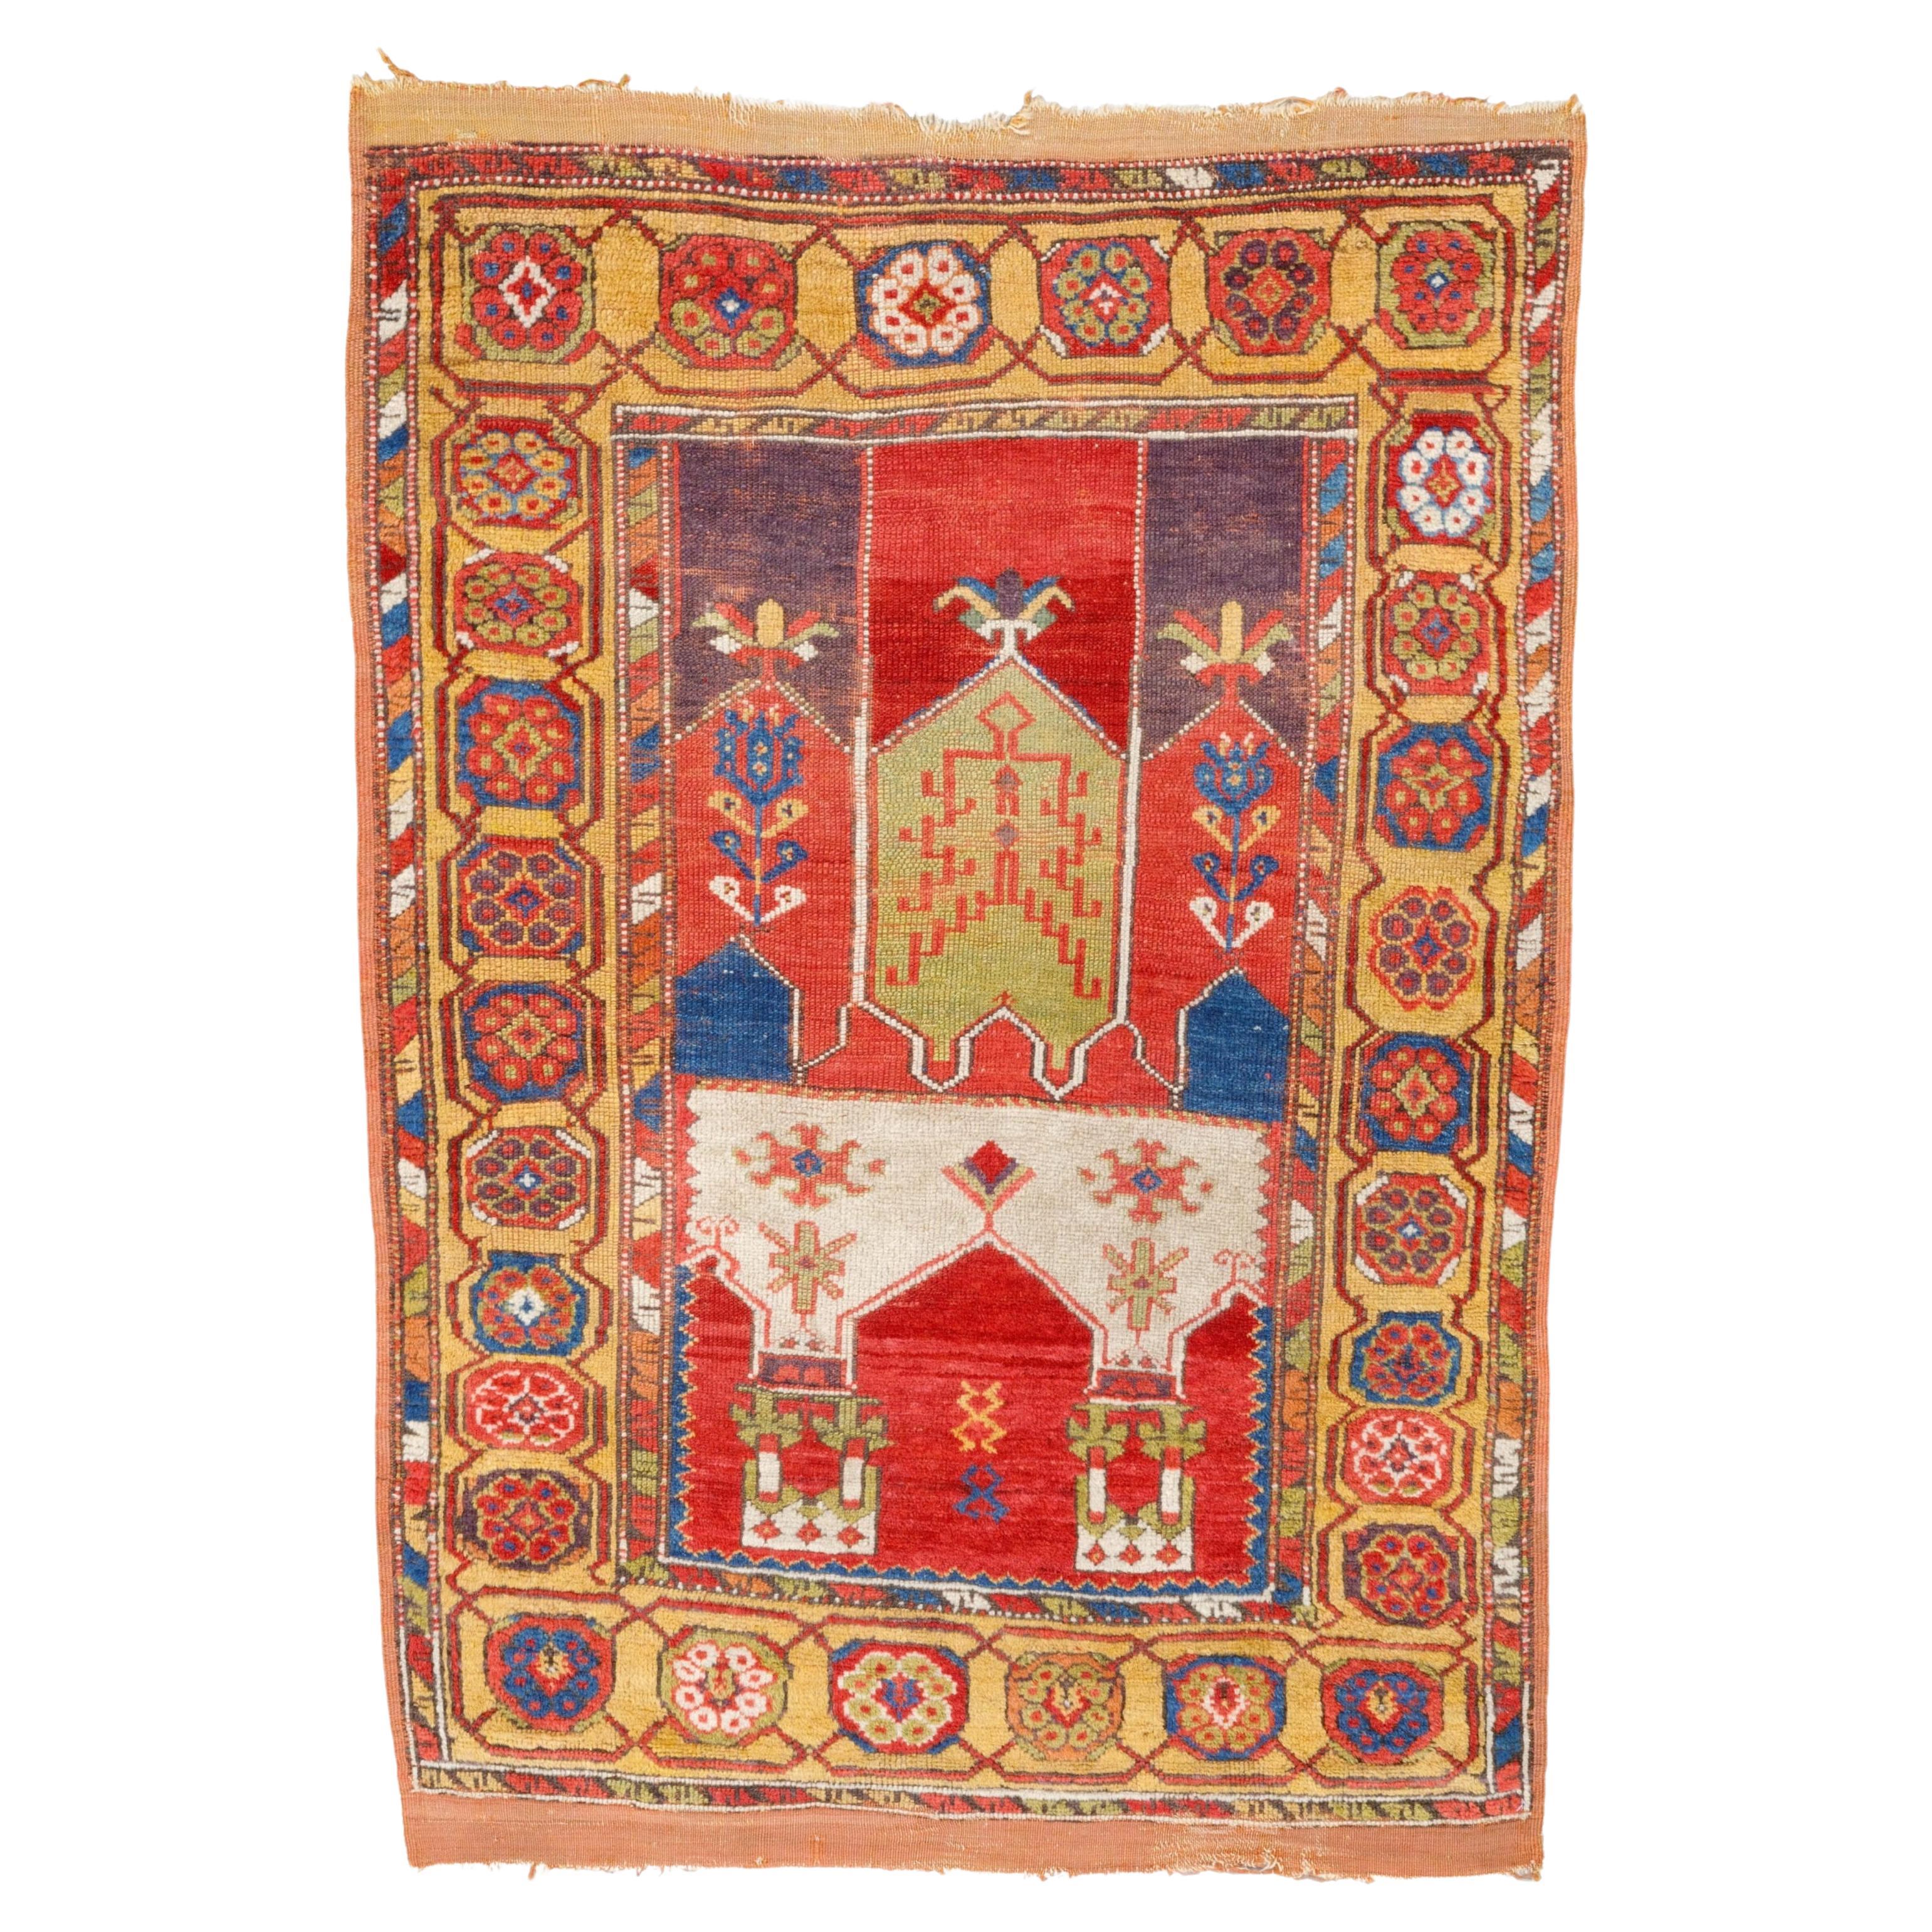 Antique Konya Prayer Rug - Early 19th Century Central Anatolian Konya Prayer Rug For Sale